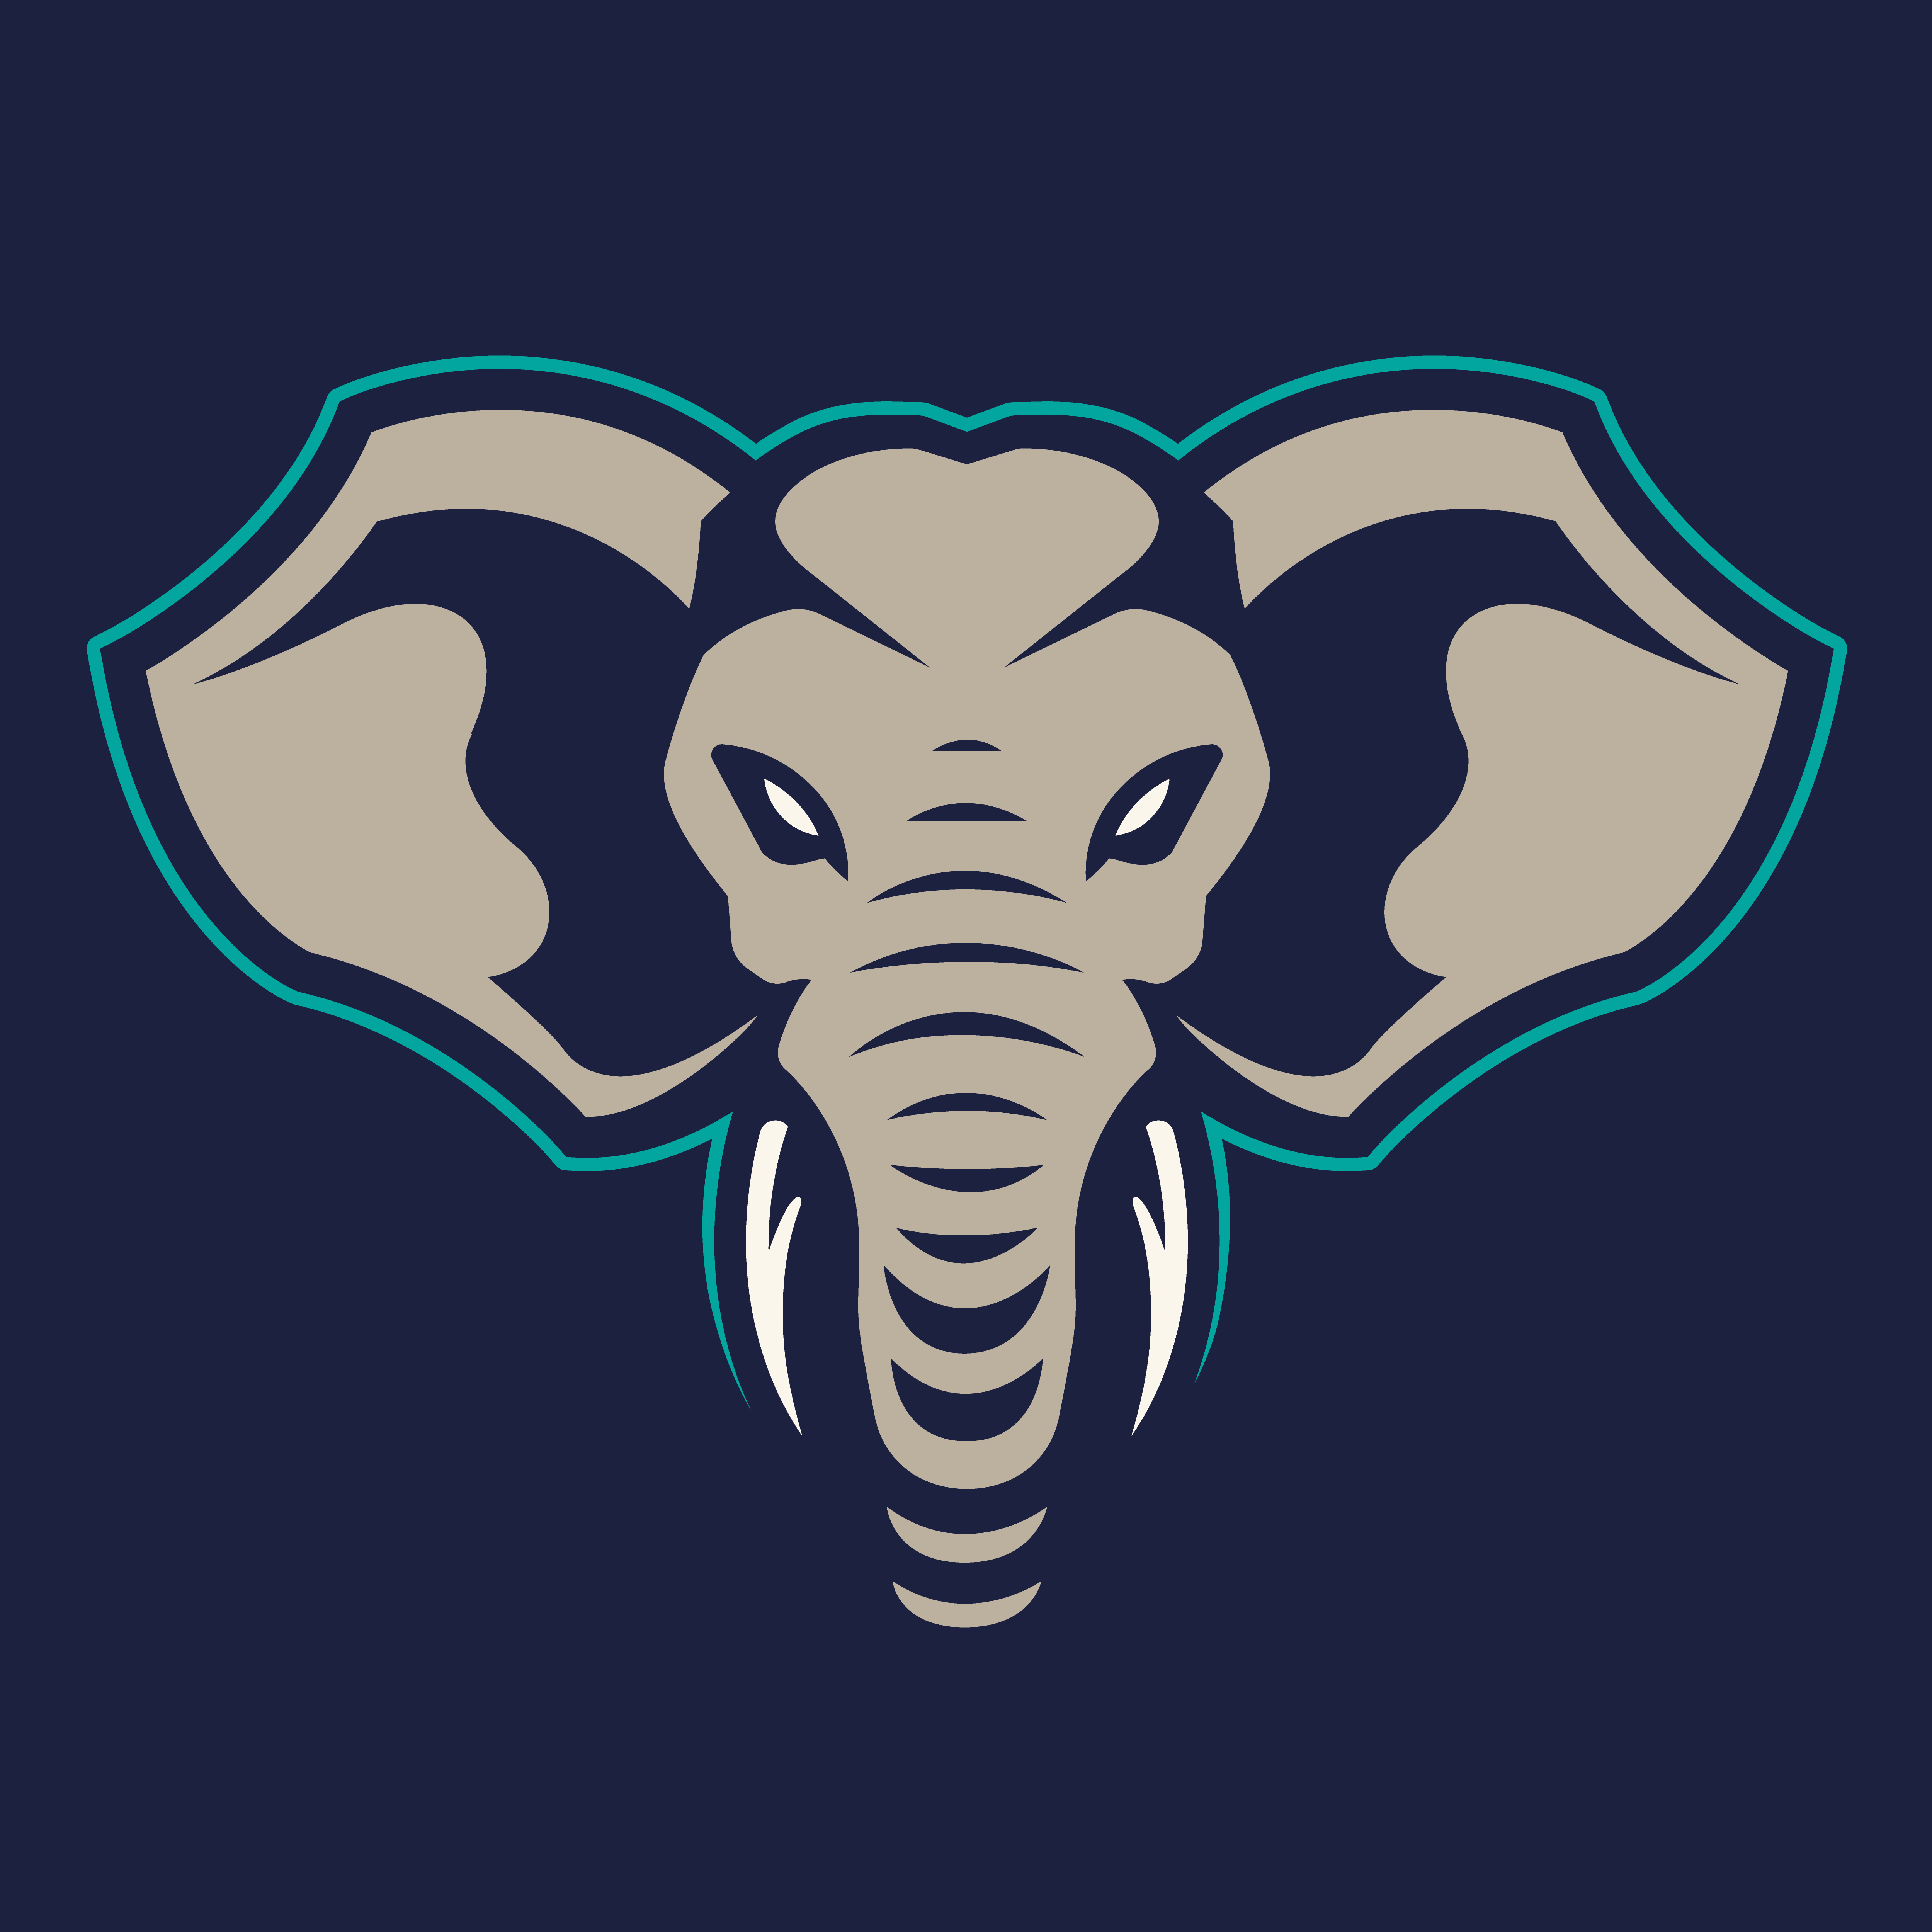 Download Elephant Mascot Vector Icon - Download Free Vectors ...